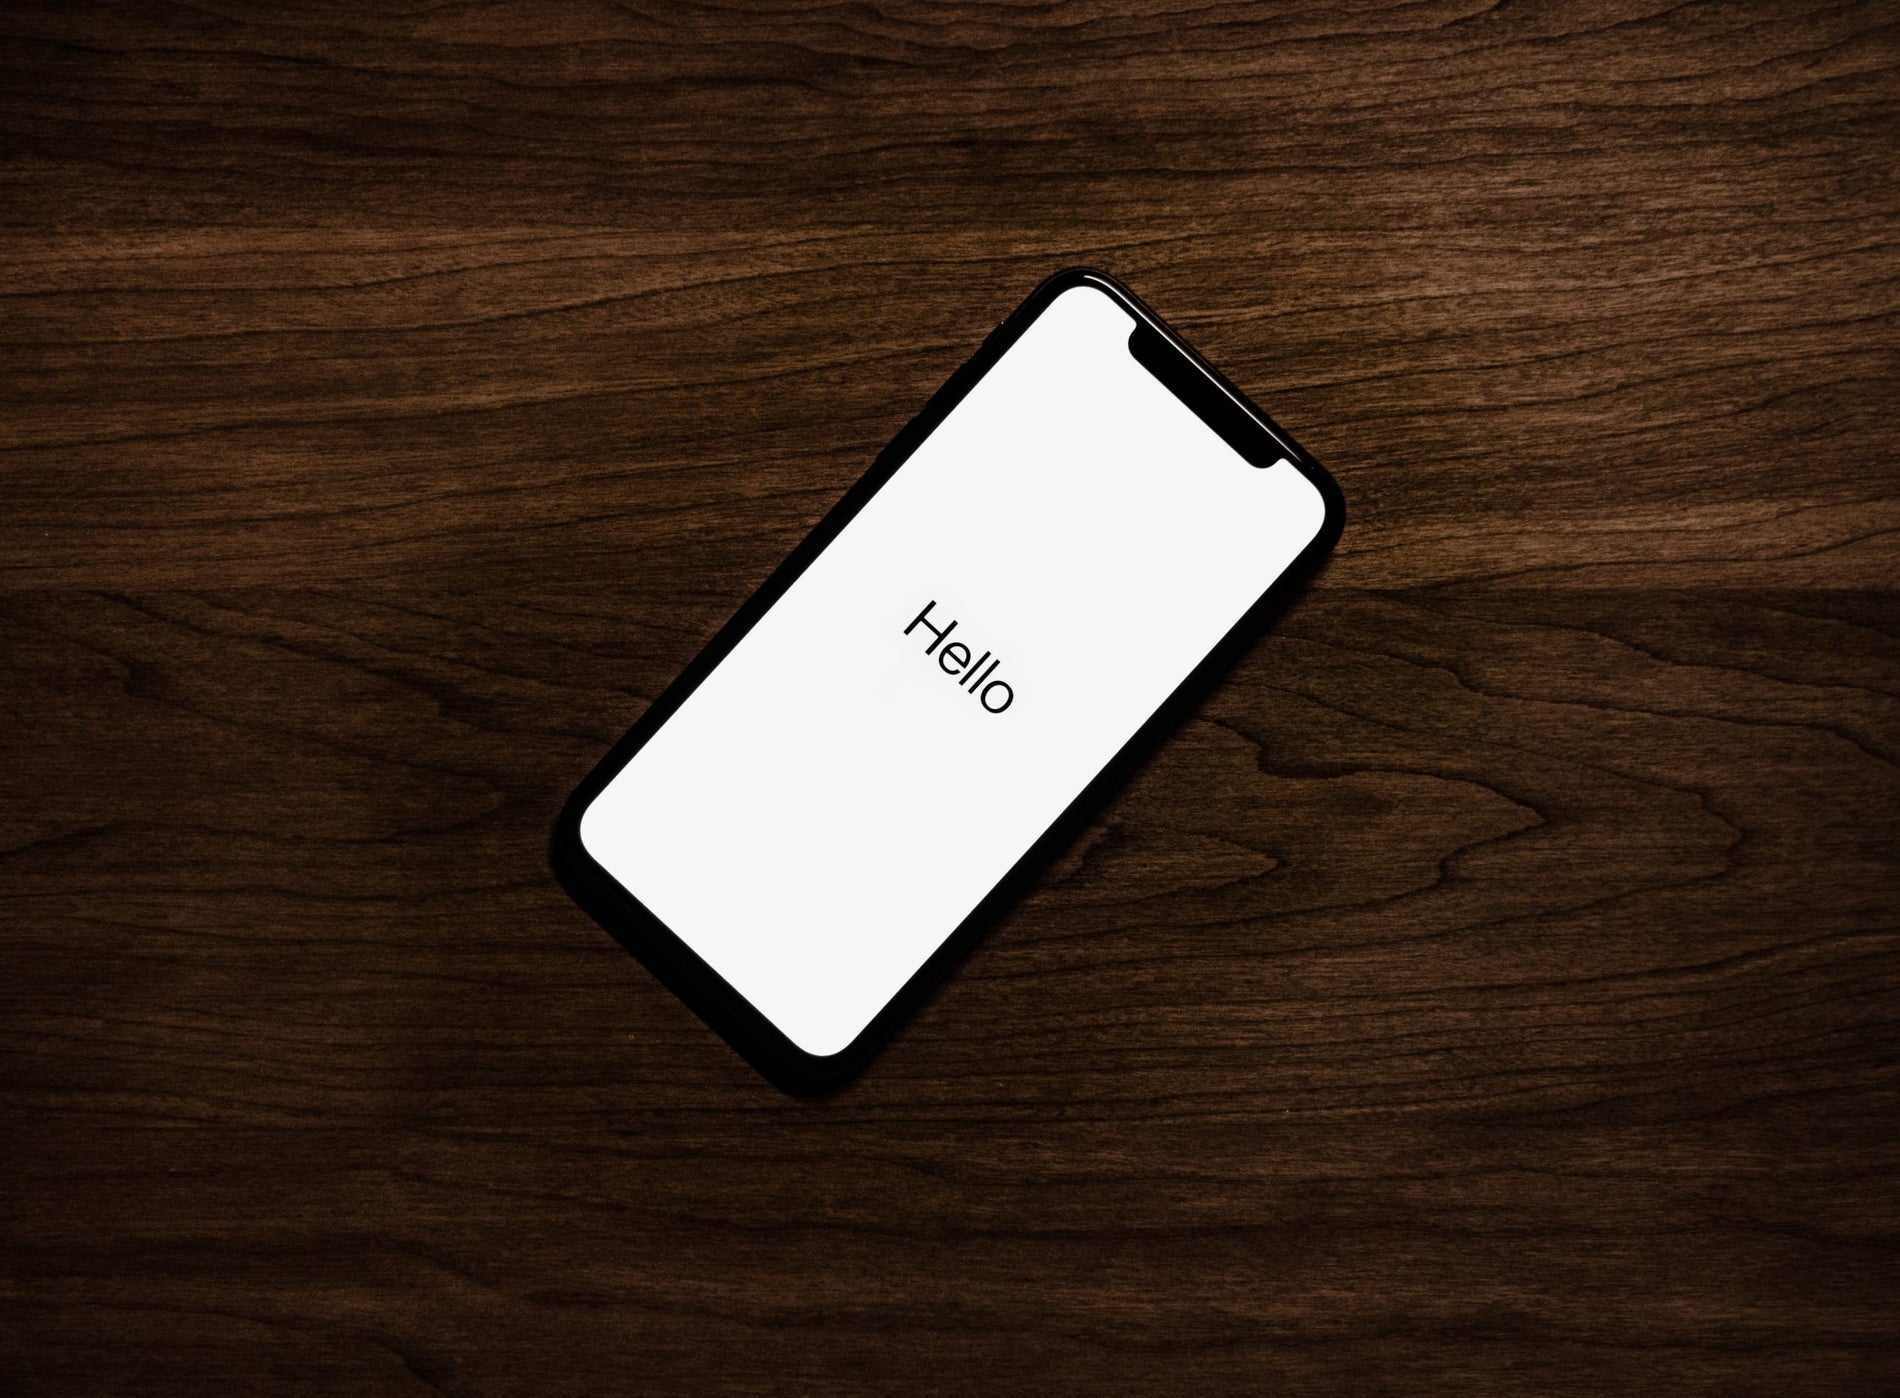 iPhone med helt hvid skærm og teksten "Hello."